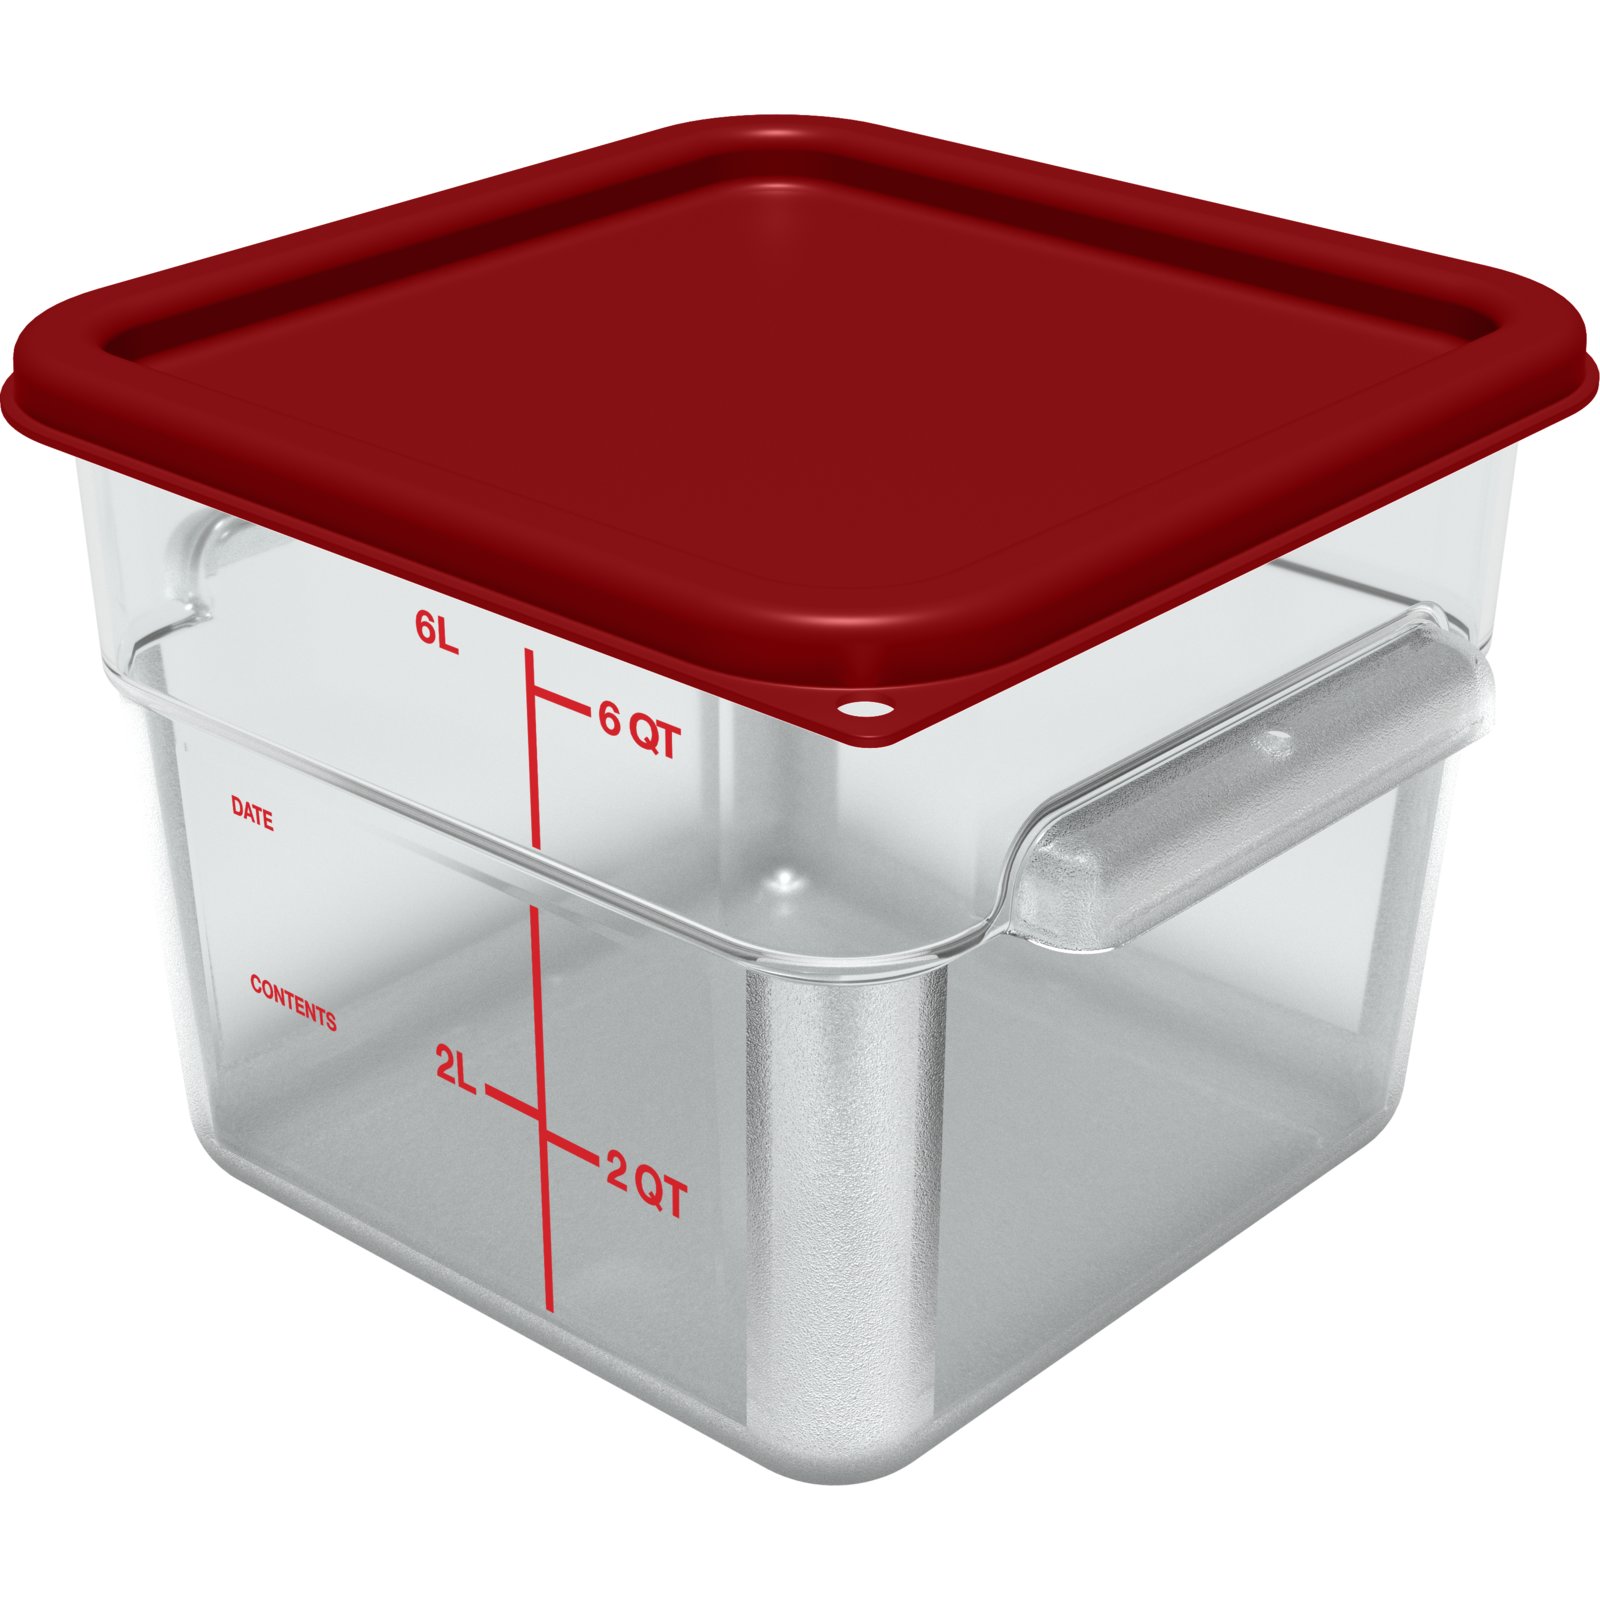 1195207 - Squares Polycarbonate Food Storage Container 6 qt